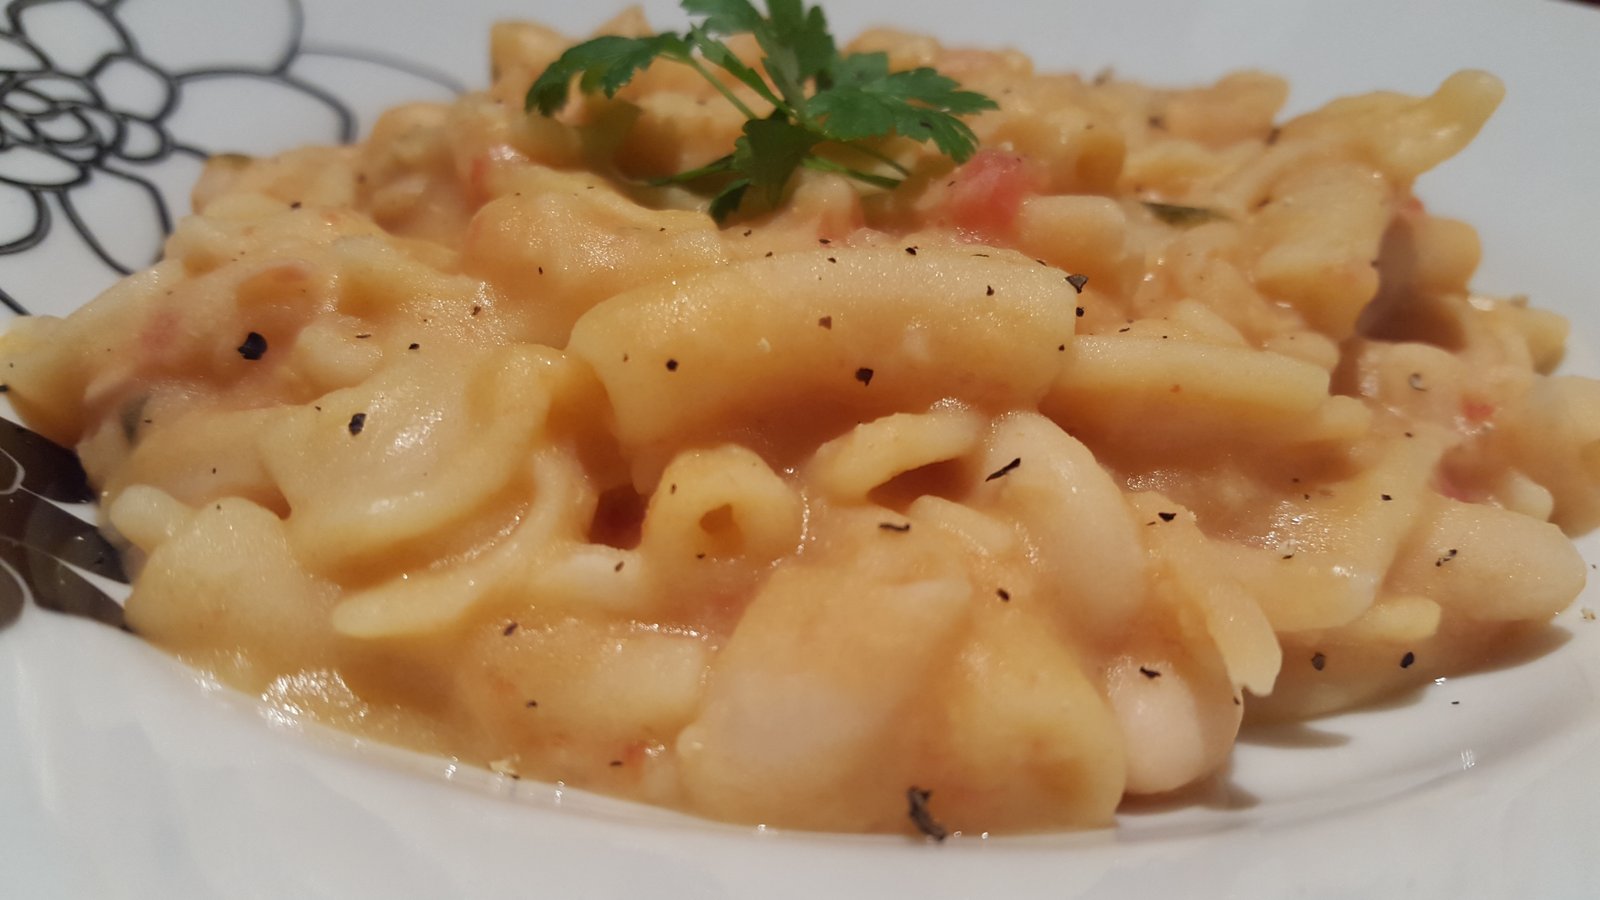 Pasta e fagioli – thick pasta and bean soup - Coochinando